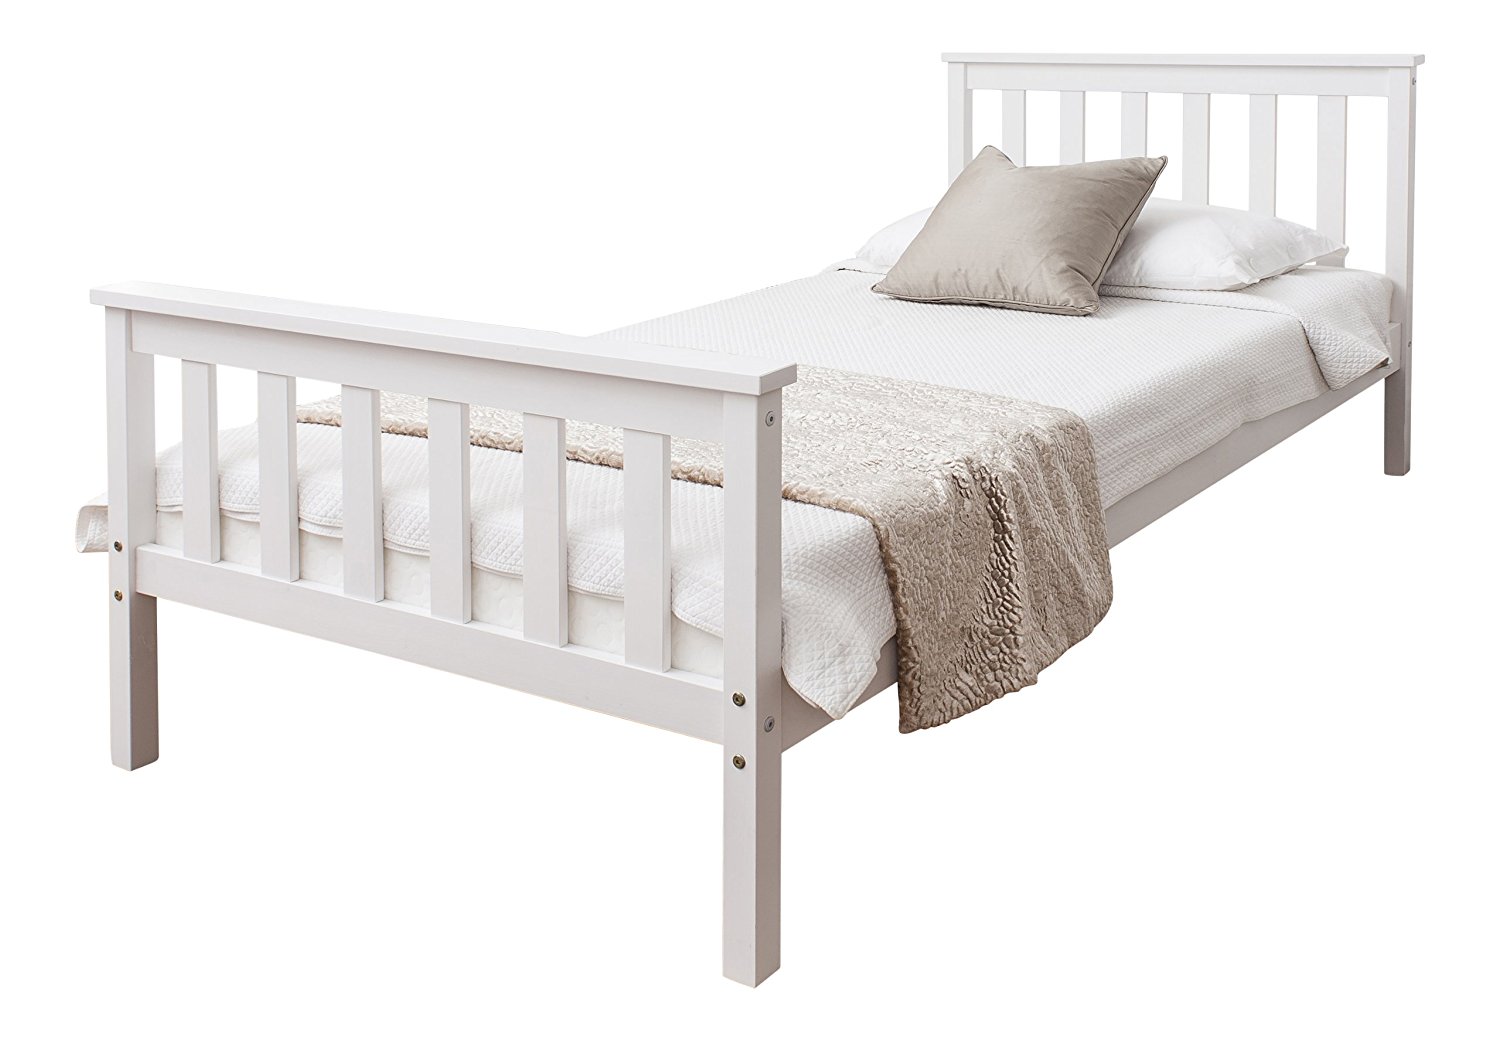 White Wood Single Bed Frame